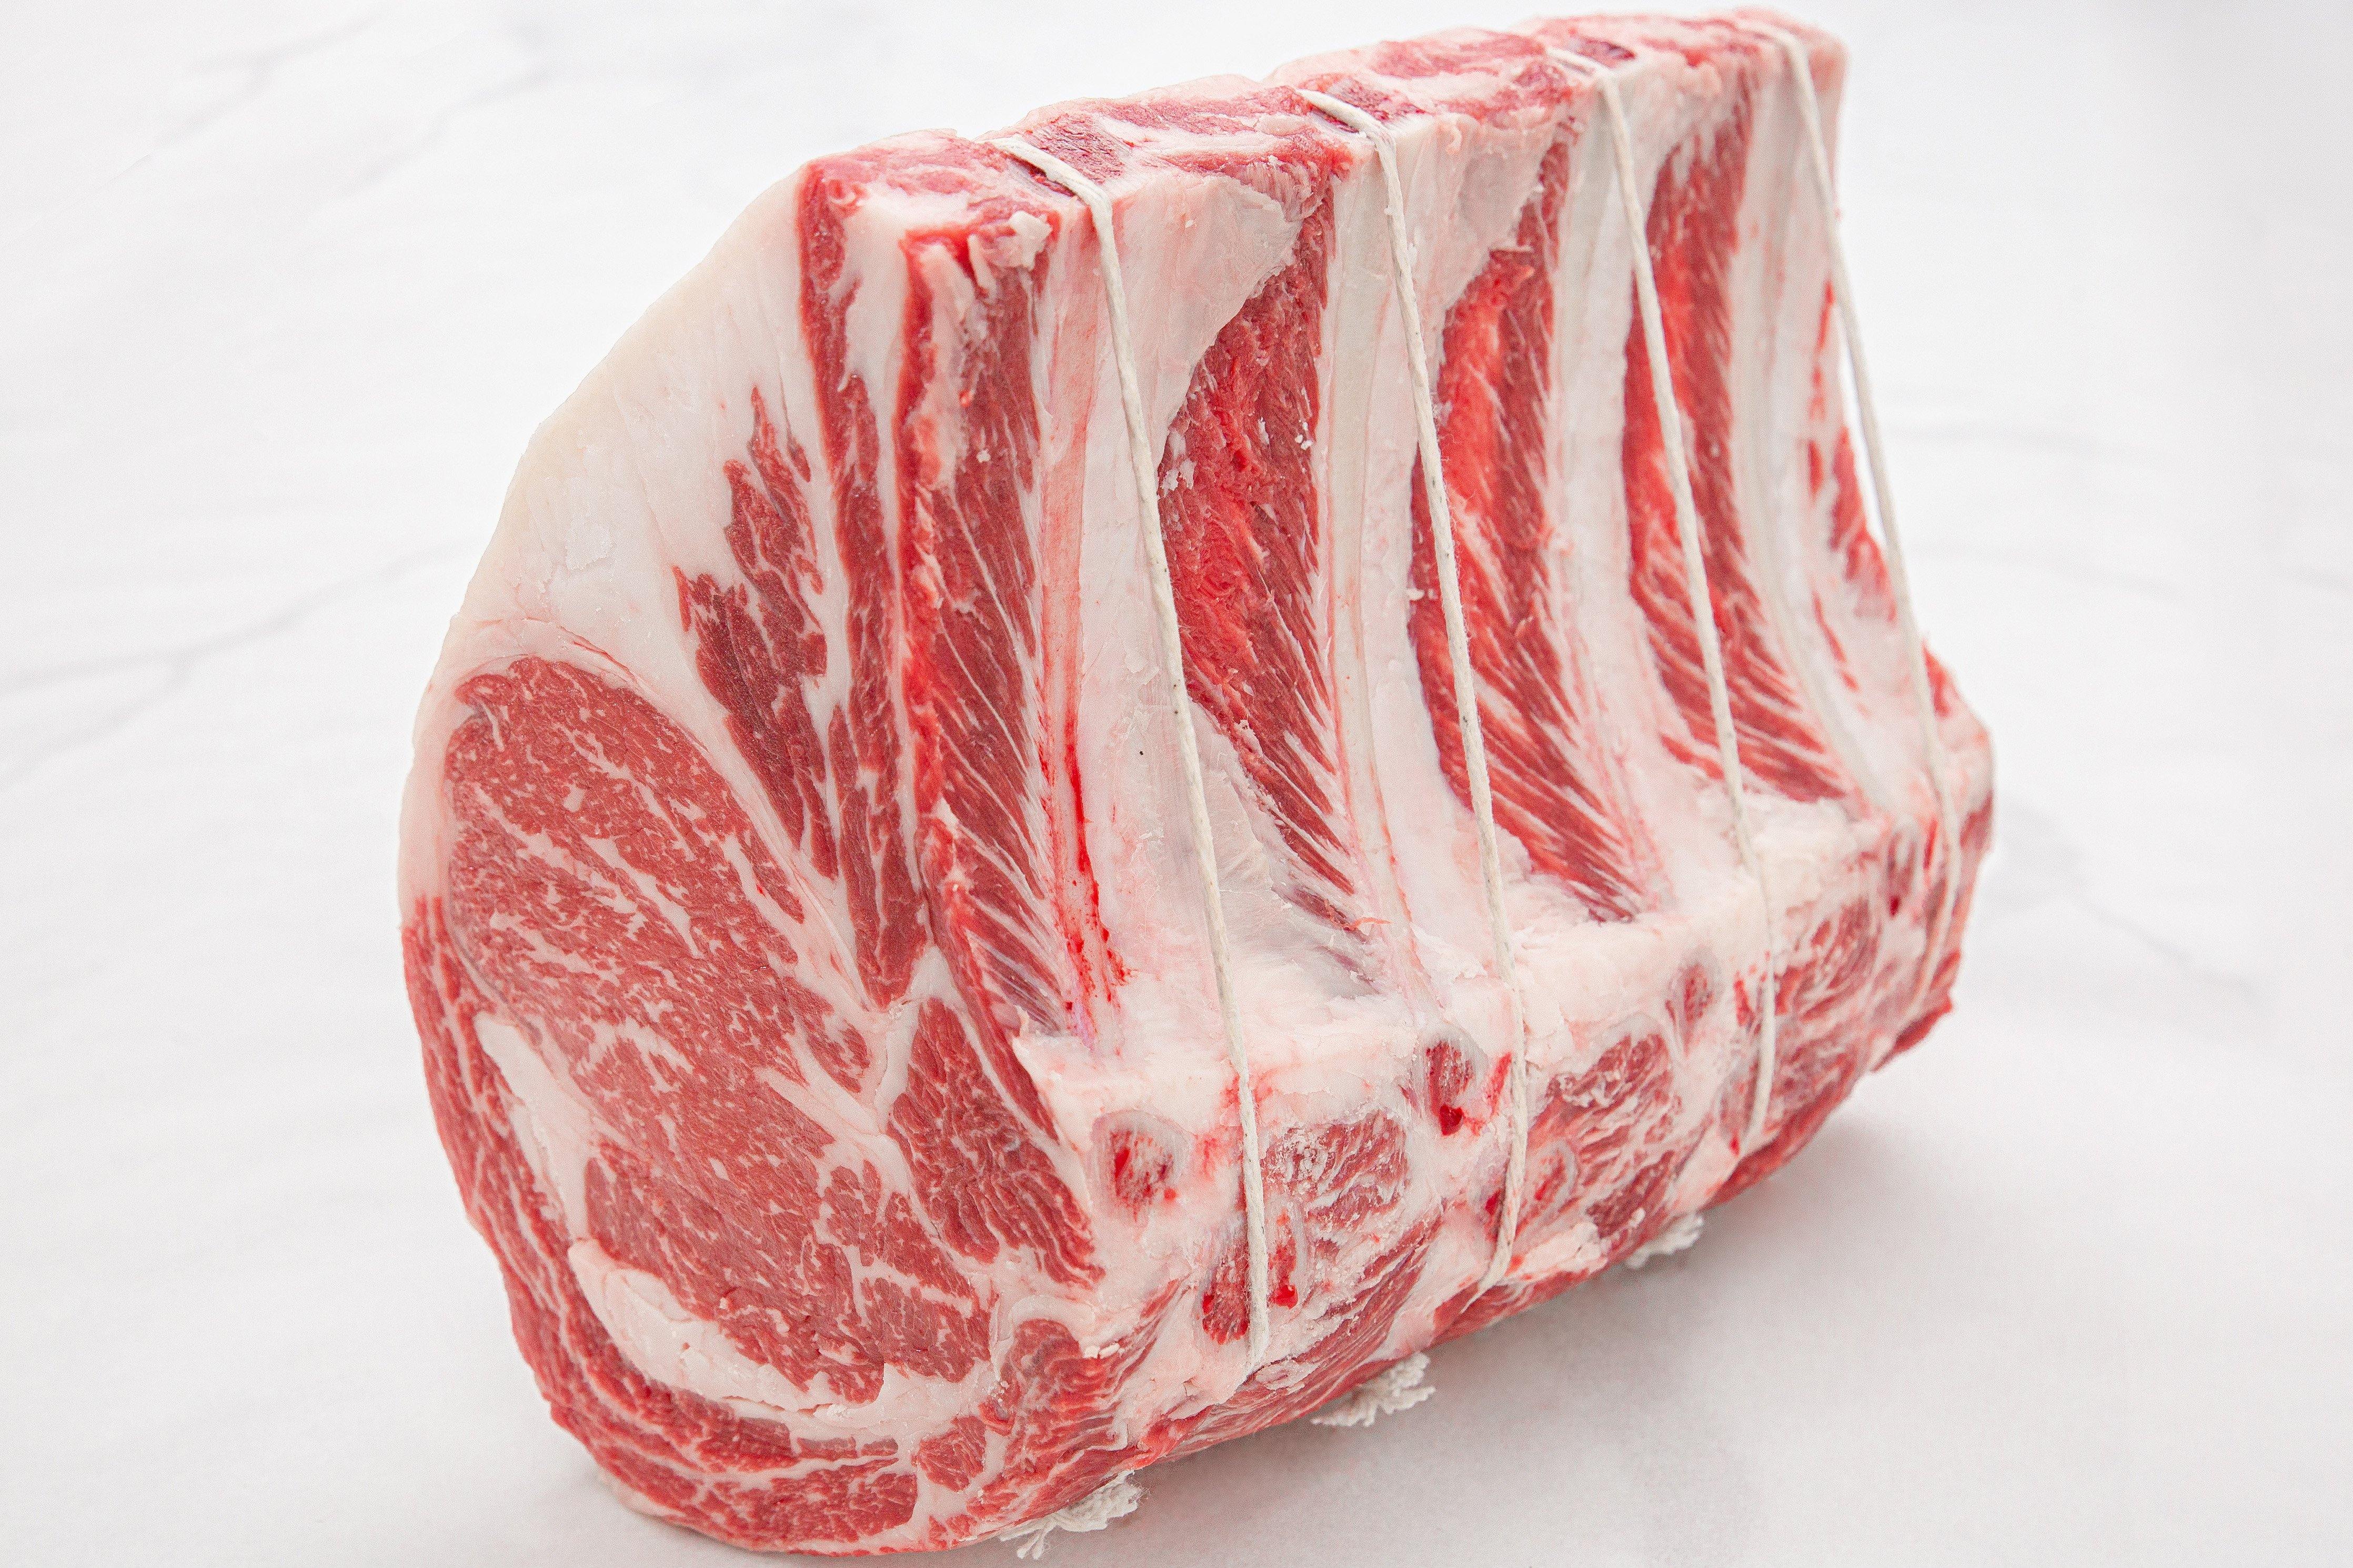 Dry-Aged Prime Beef Rib Roast, Bone-In